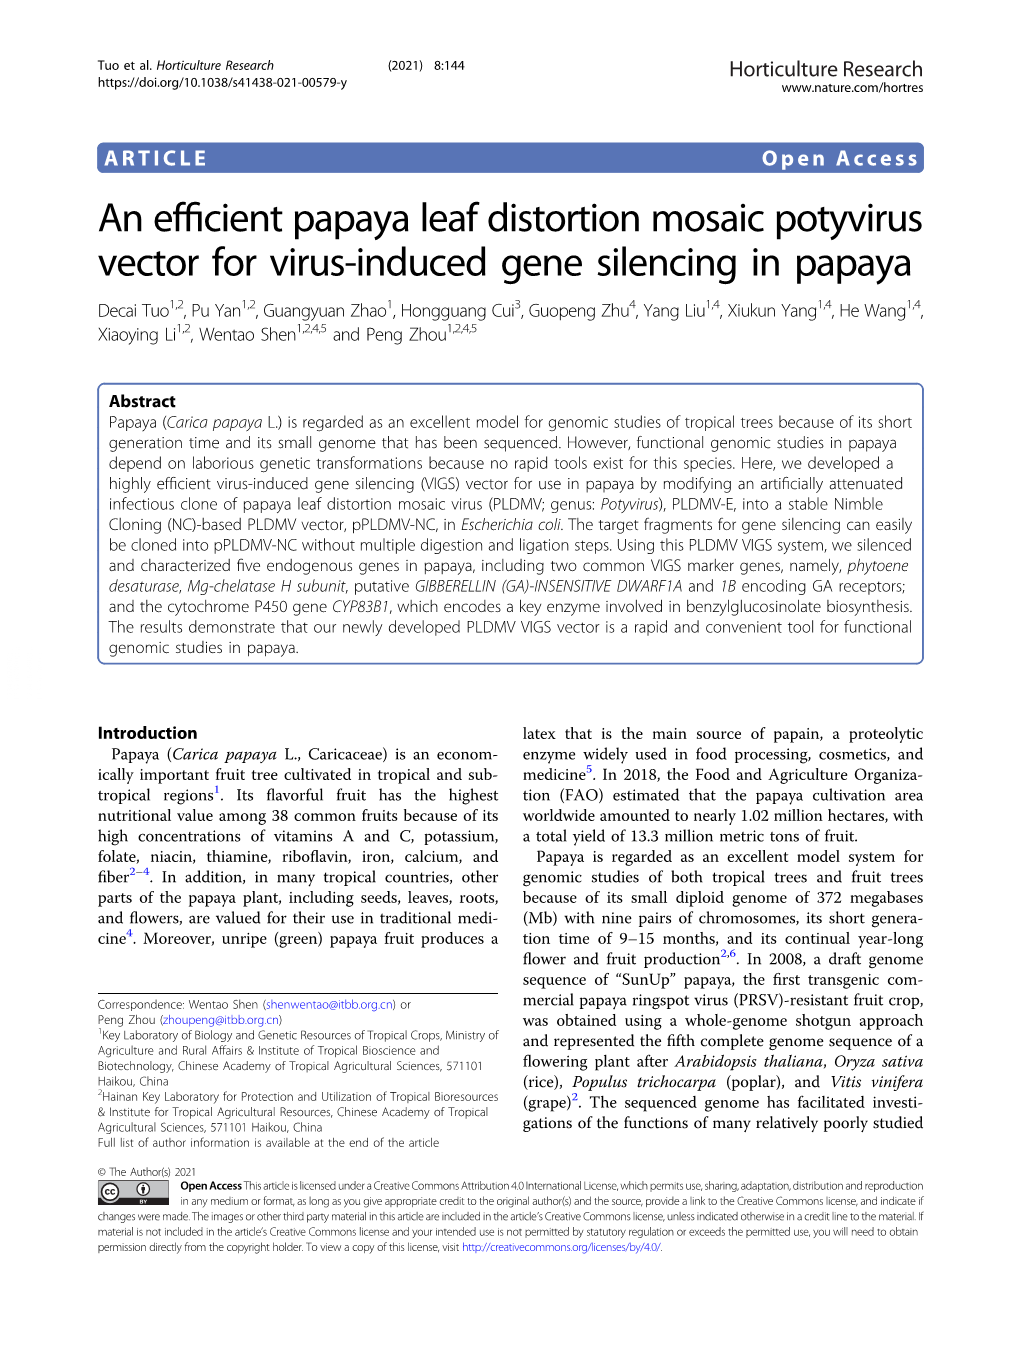 An Efficient Papaya Leaf Distortion Mosaic Potyvirus Vector for Virus